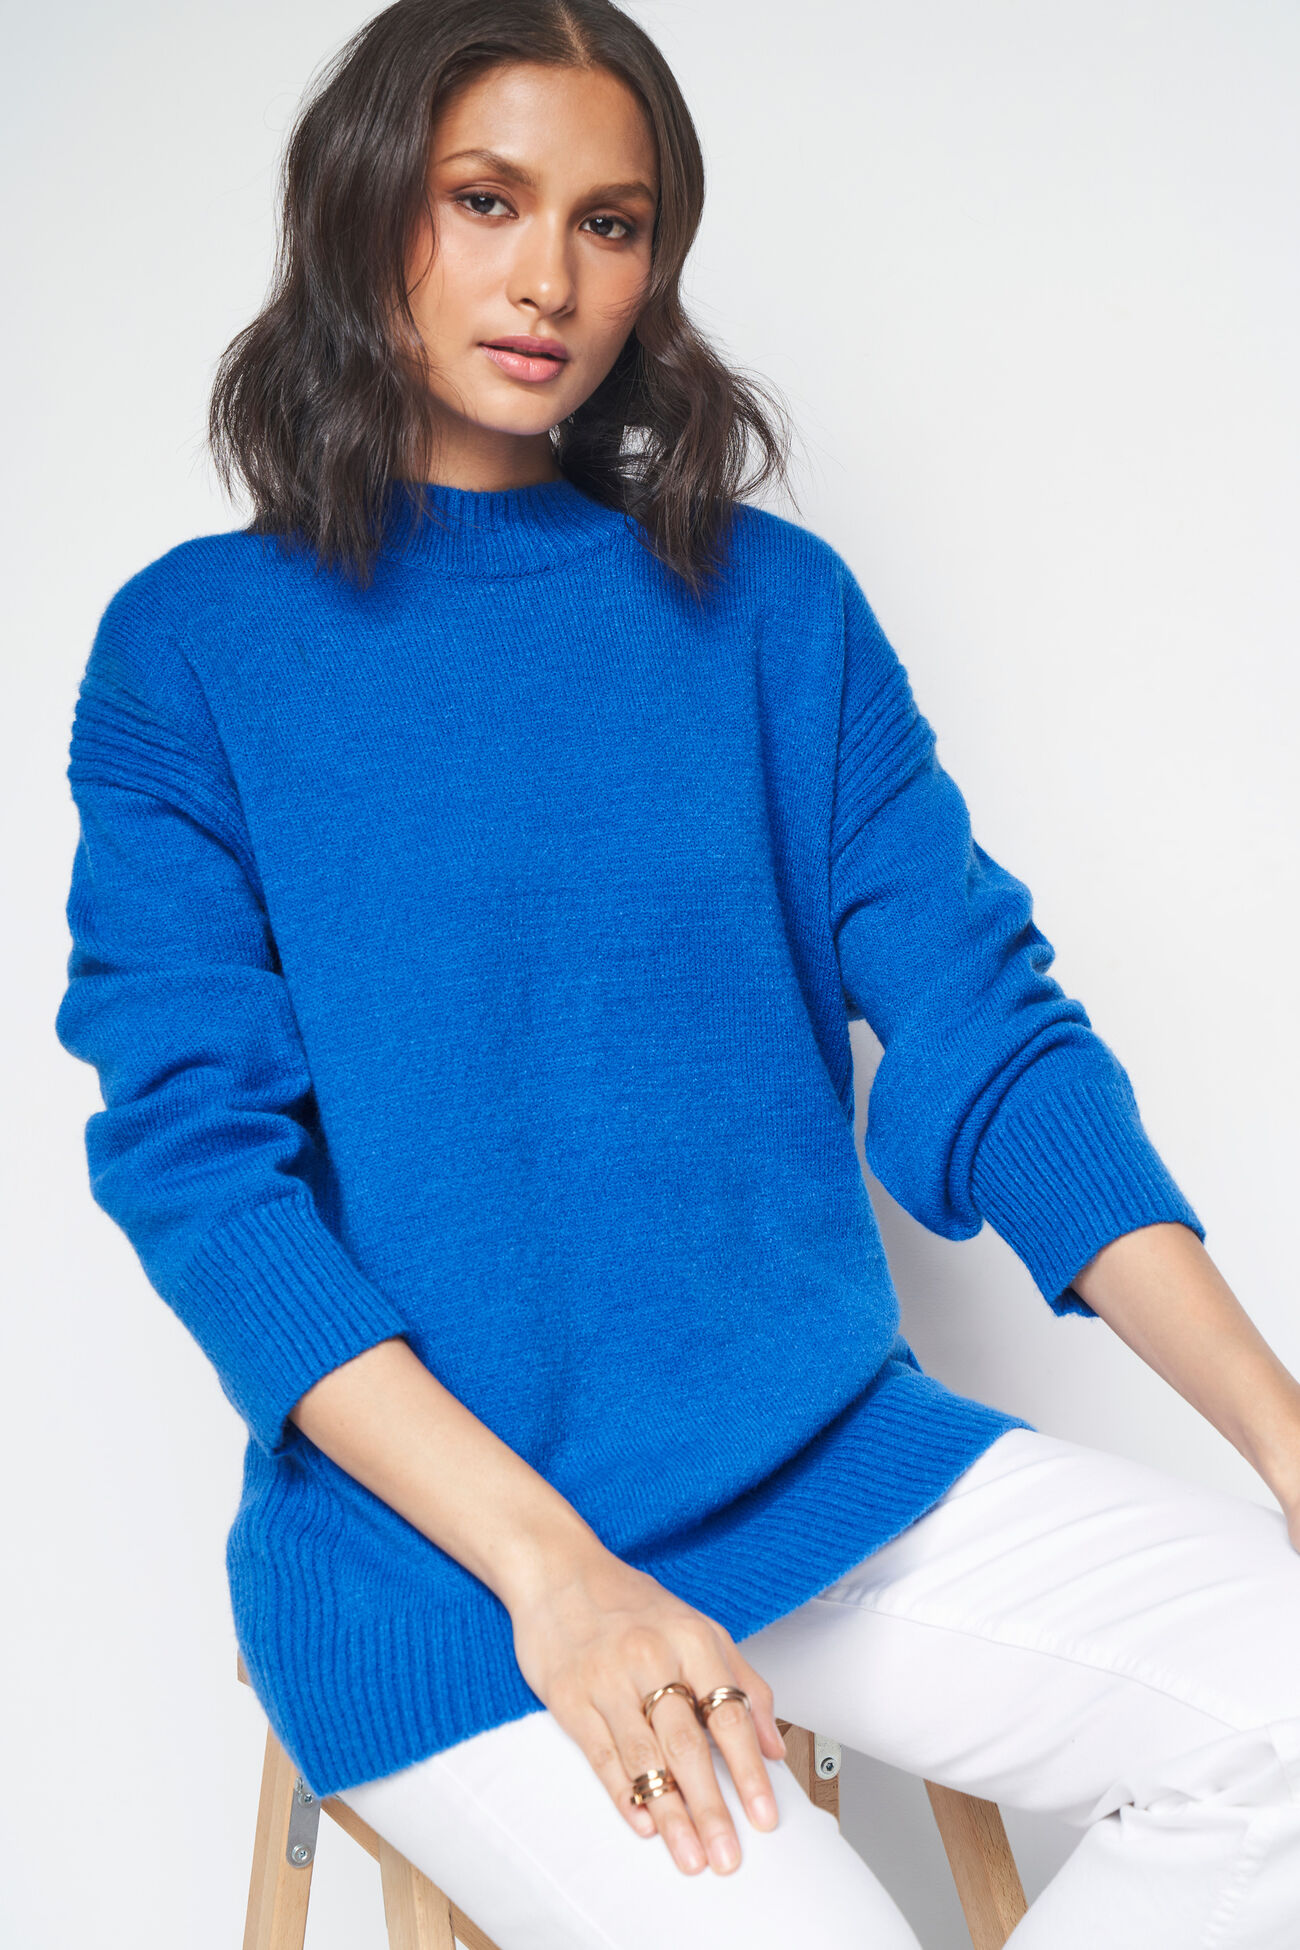 Aspen Over-Sized Sweater, Blue, image 3